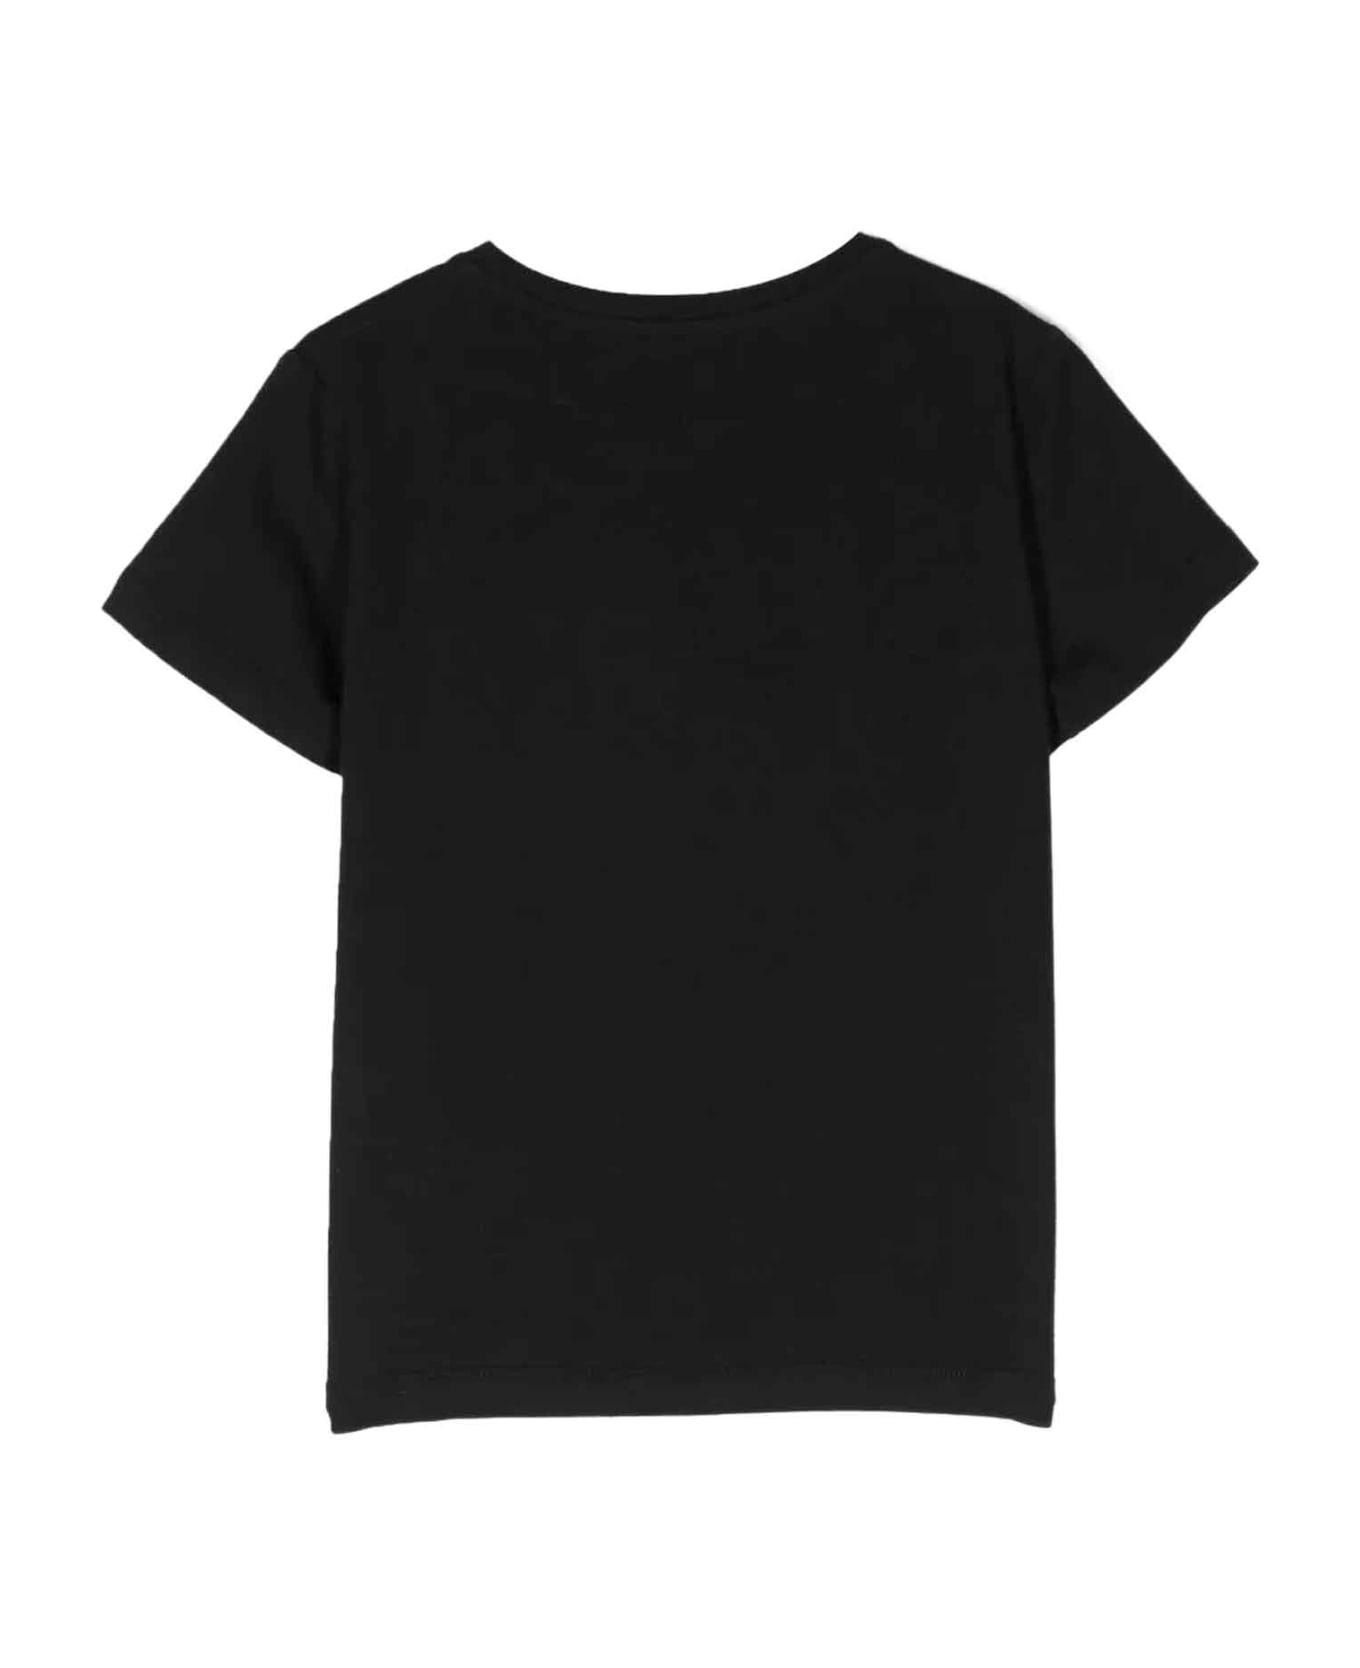 Young Versace Black T-shirt Unisex Kids - Nero